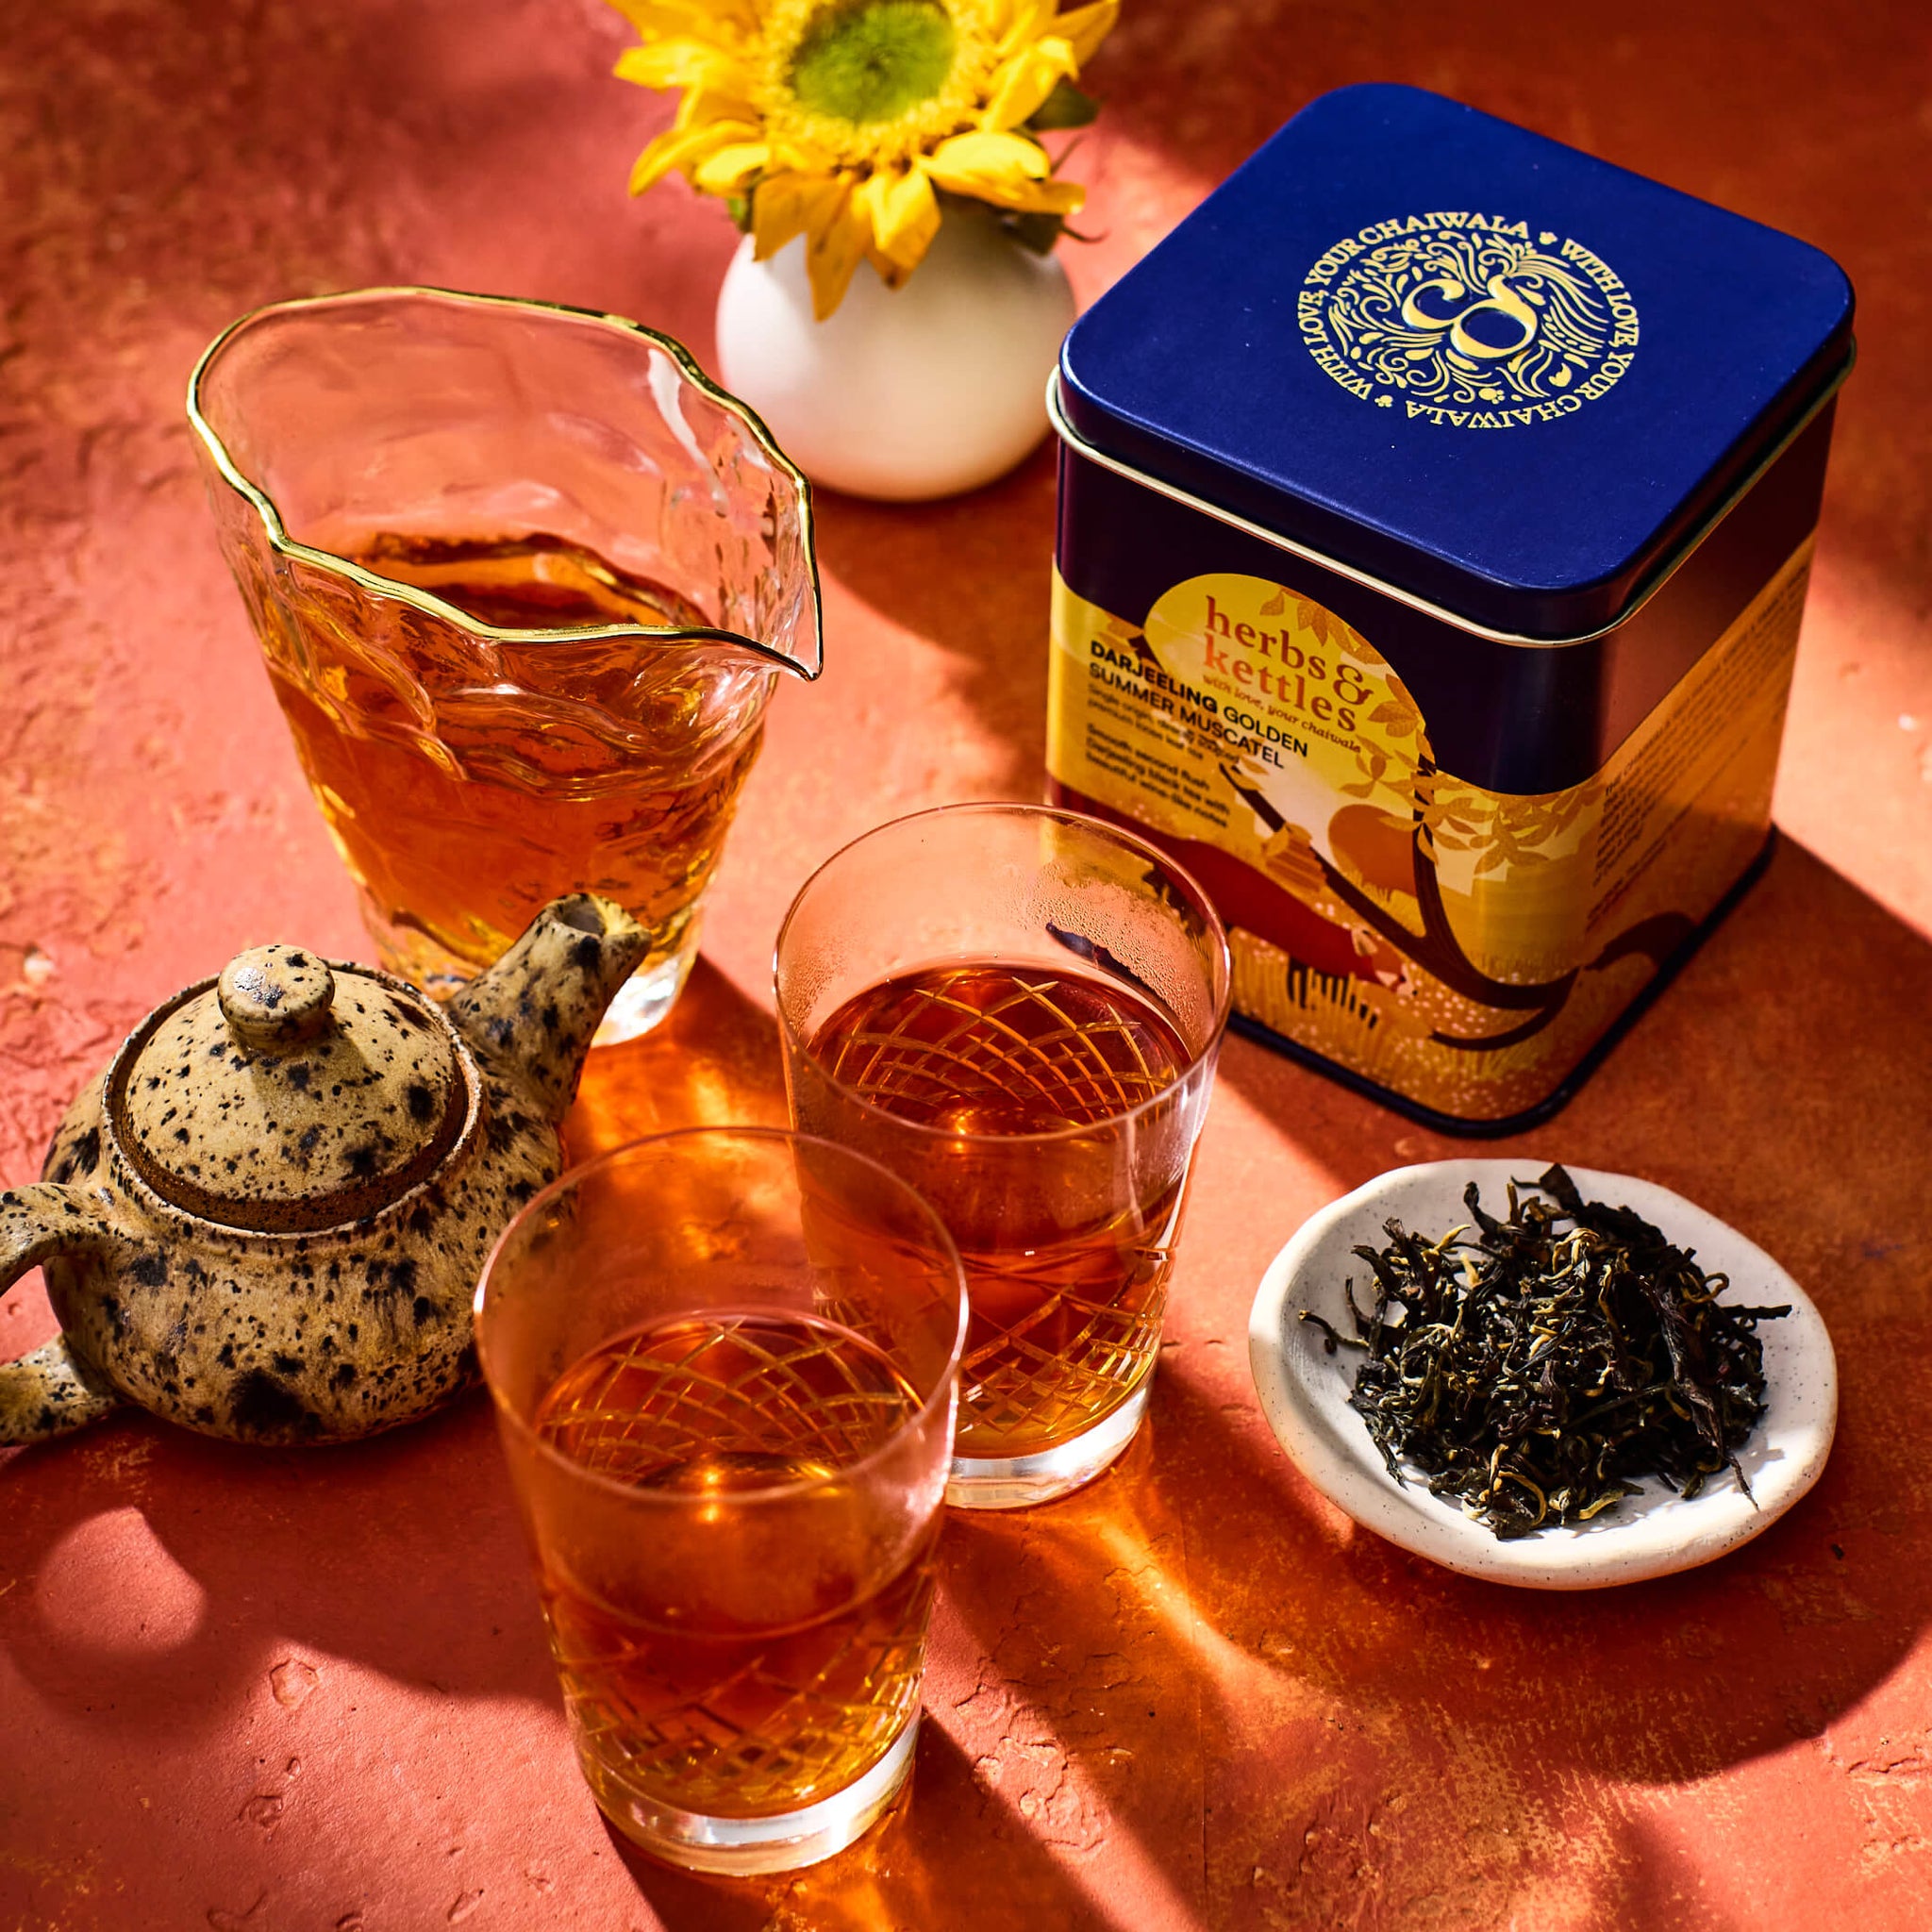 A second-flush Darjeeling black tea with a high-moderate caffeine content.